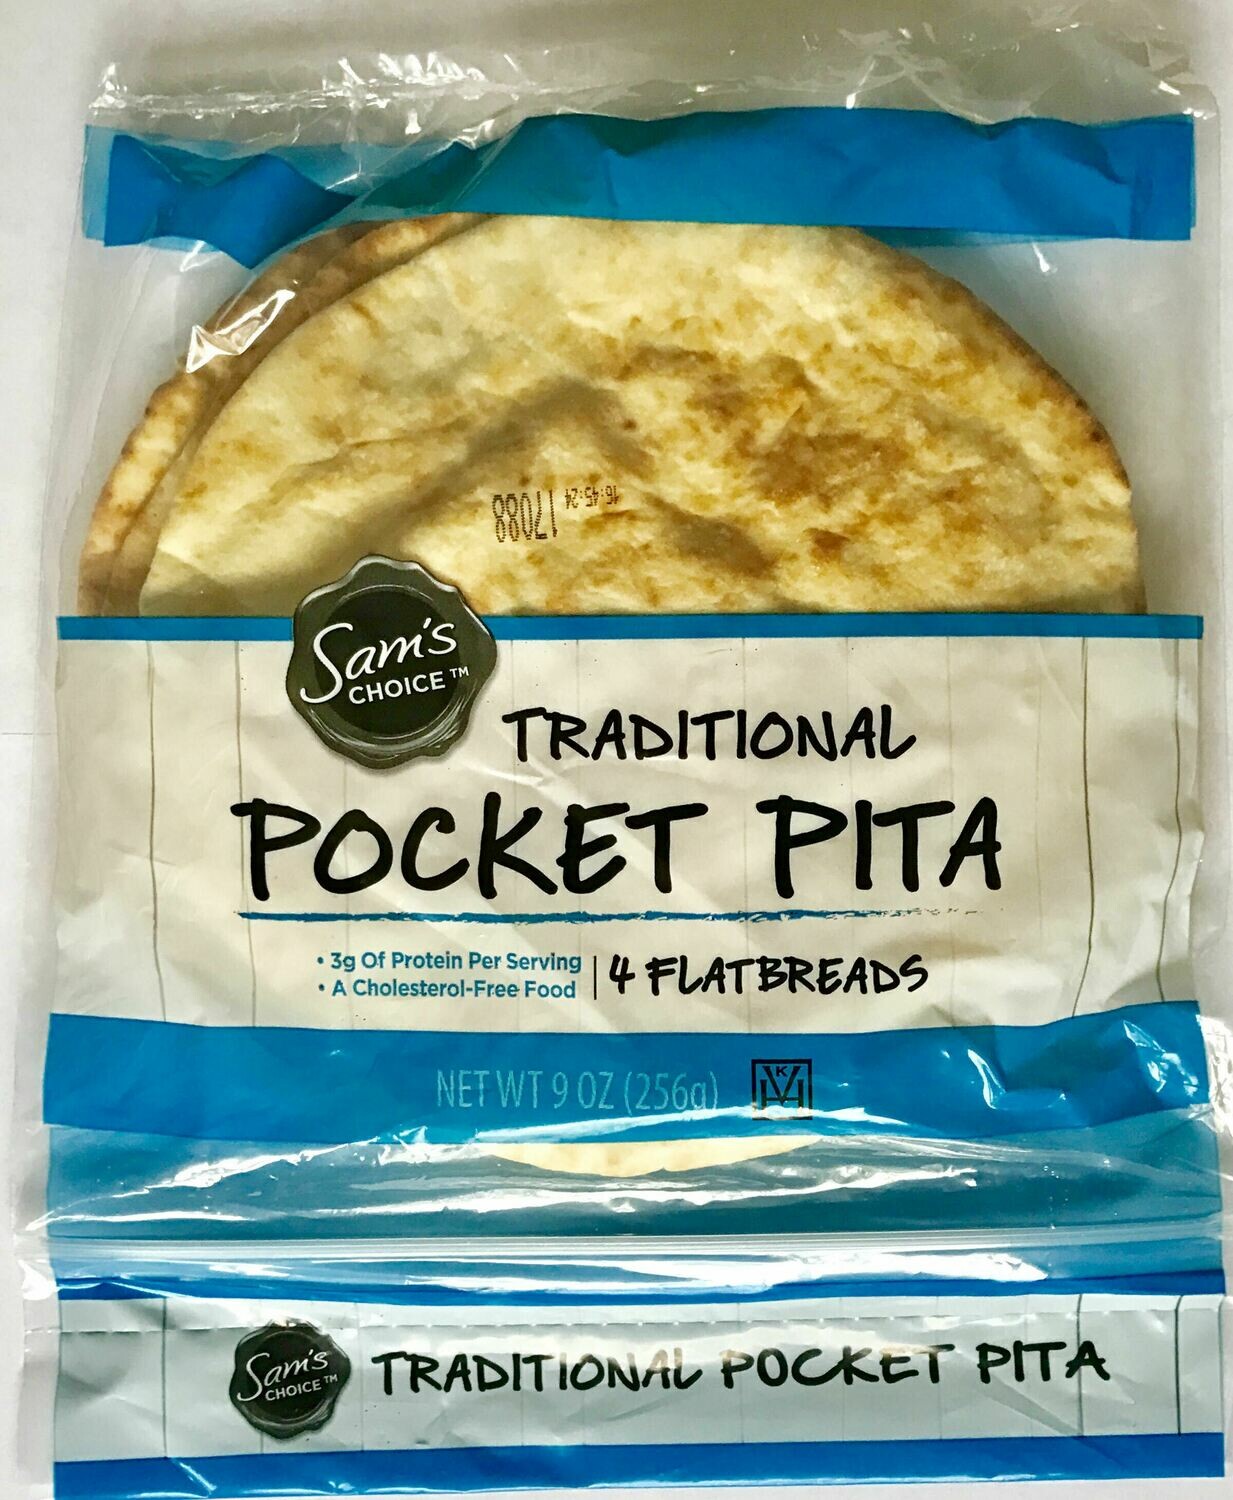 Pita Bread - Traditional Pocket 4ct